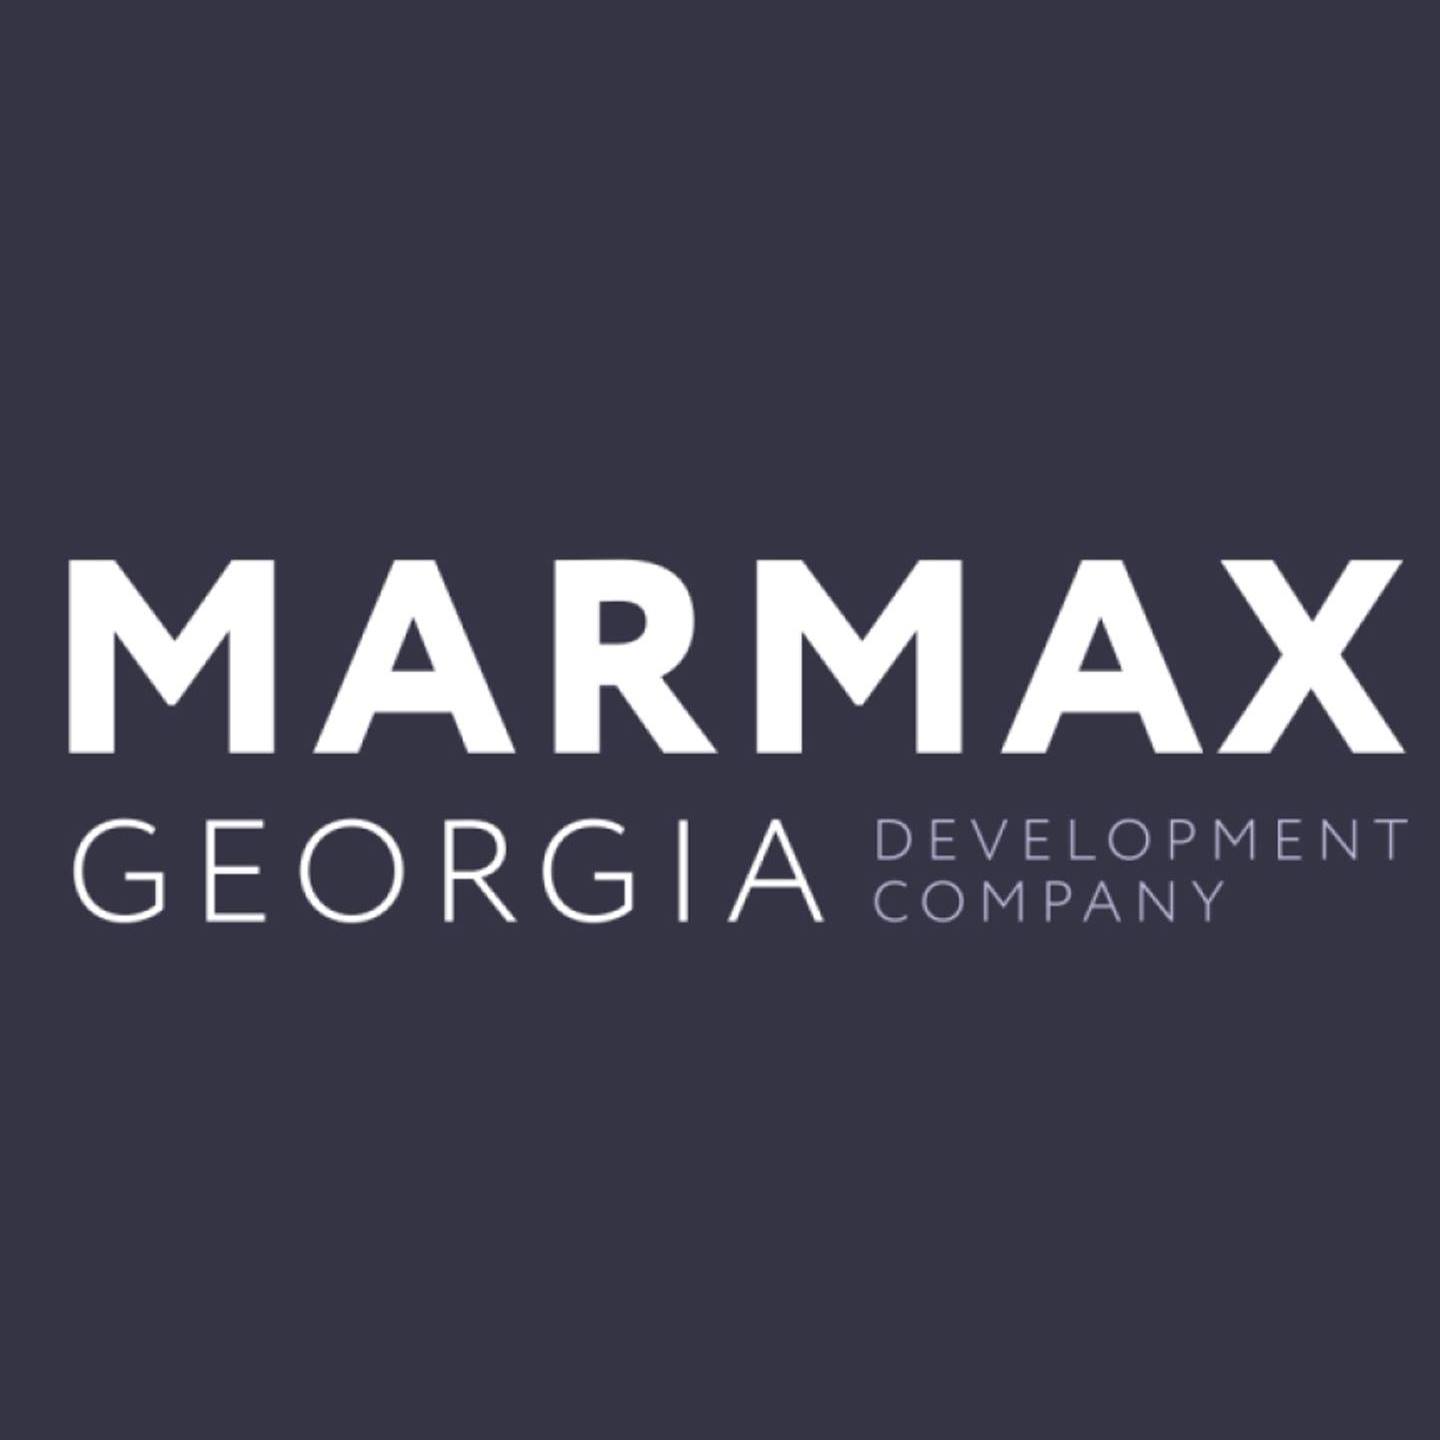 Marmax Georgia